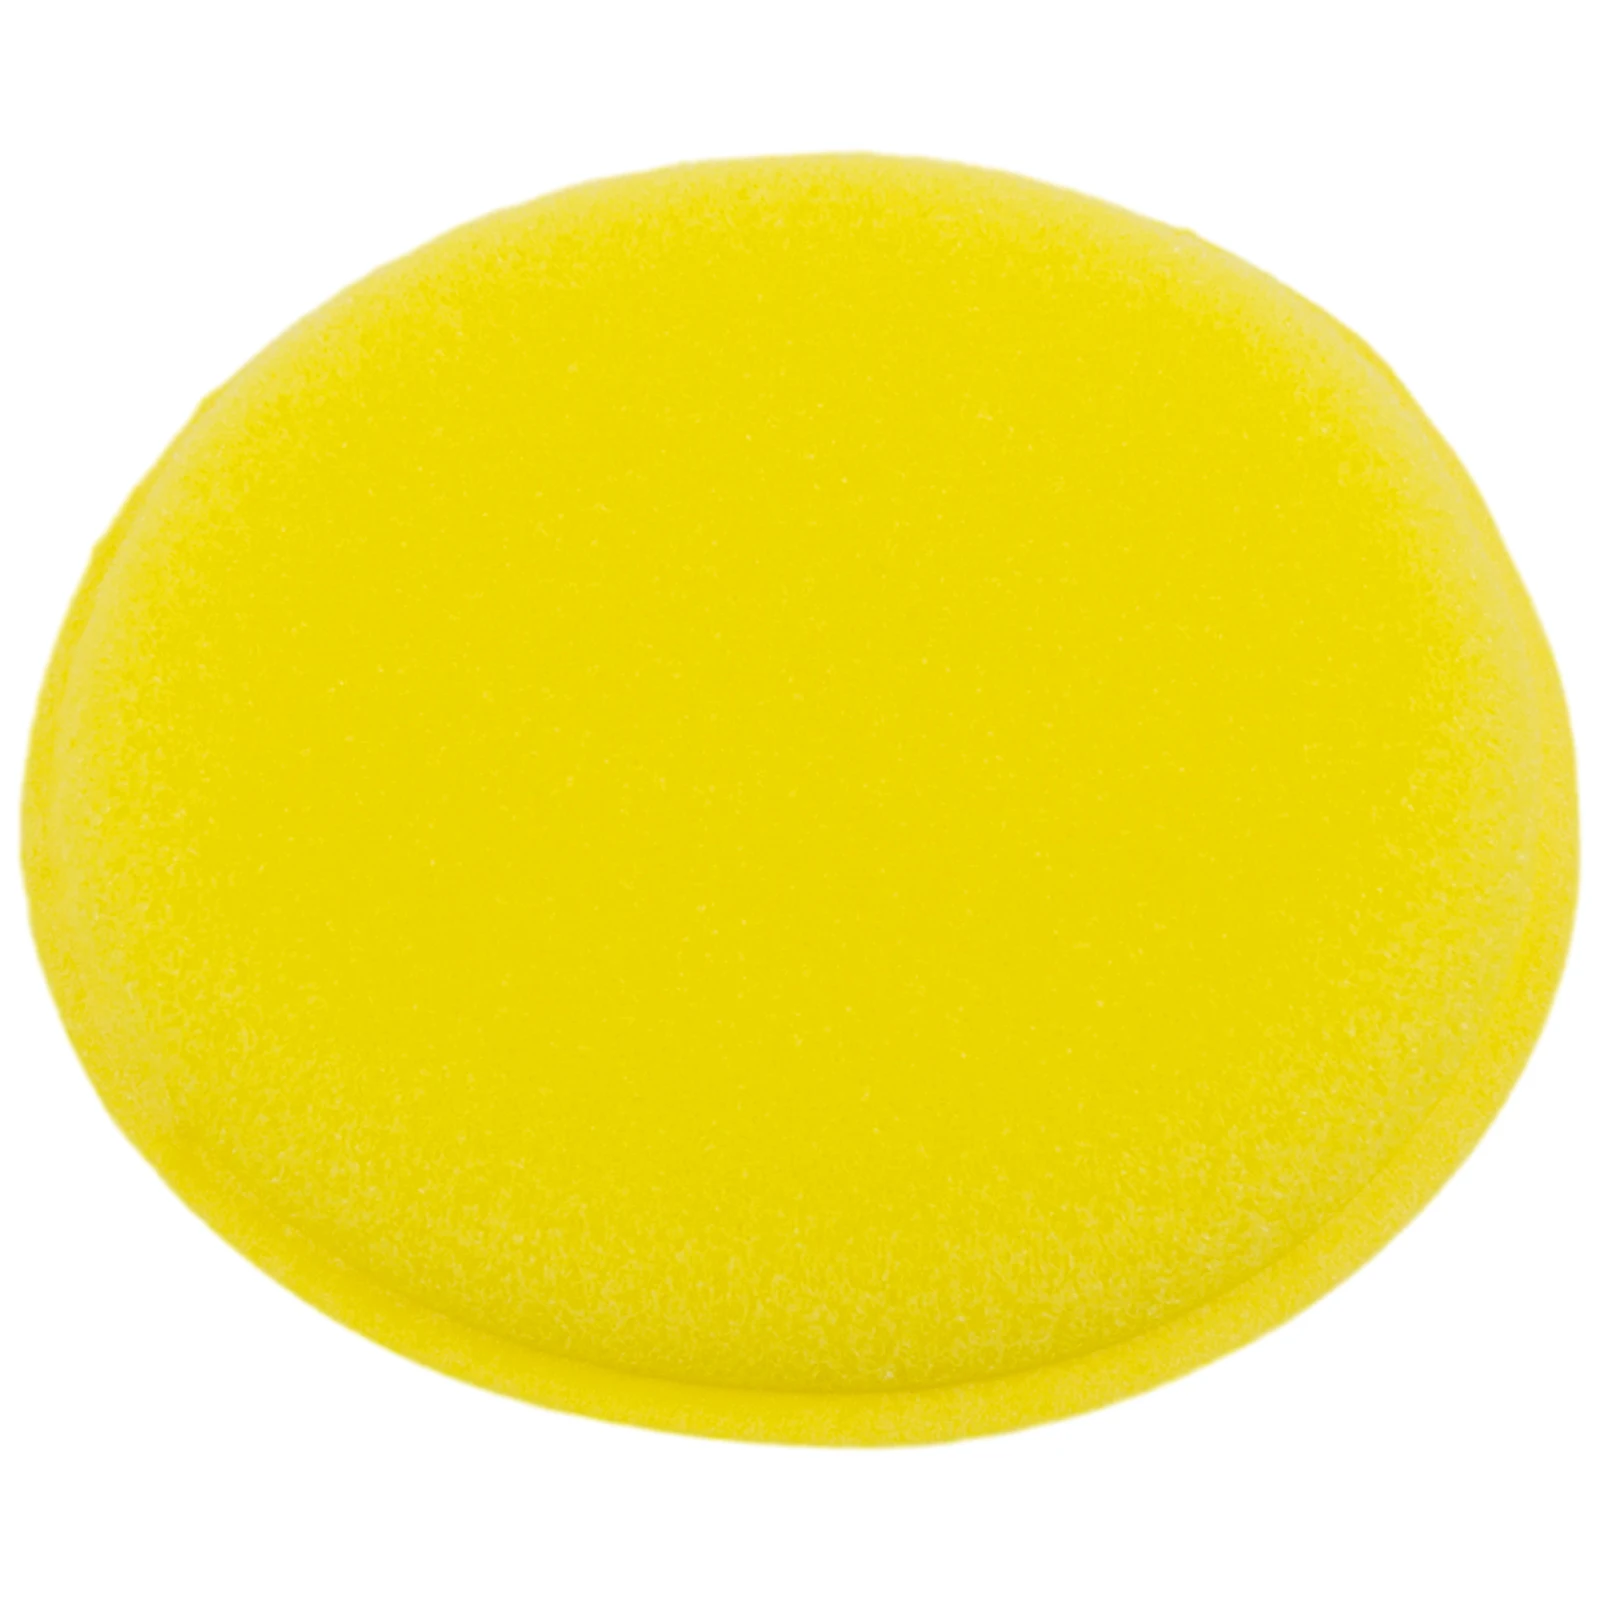 

Foam Yellow Car Polishing Wax Applicator Cleaning Sponges 100*6mm Fine pore polyester 12pcs Auto 2018 Sale Universal New